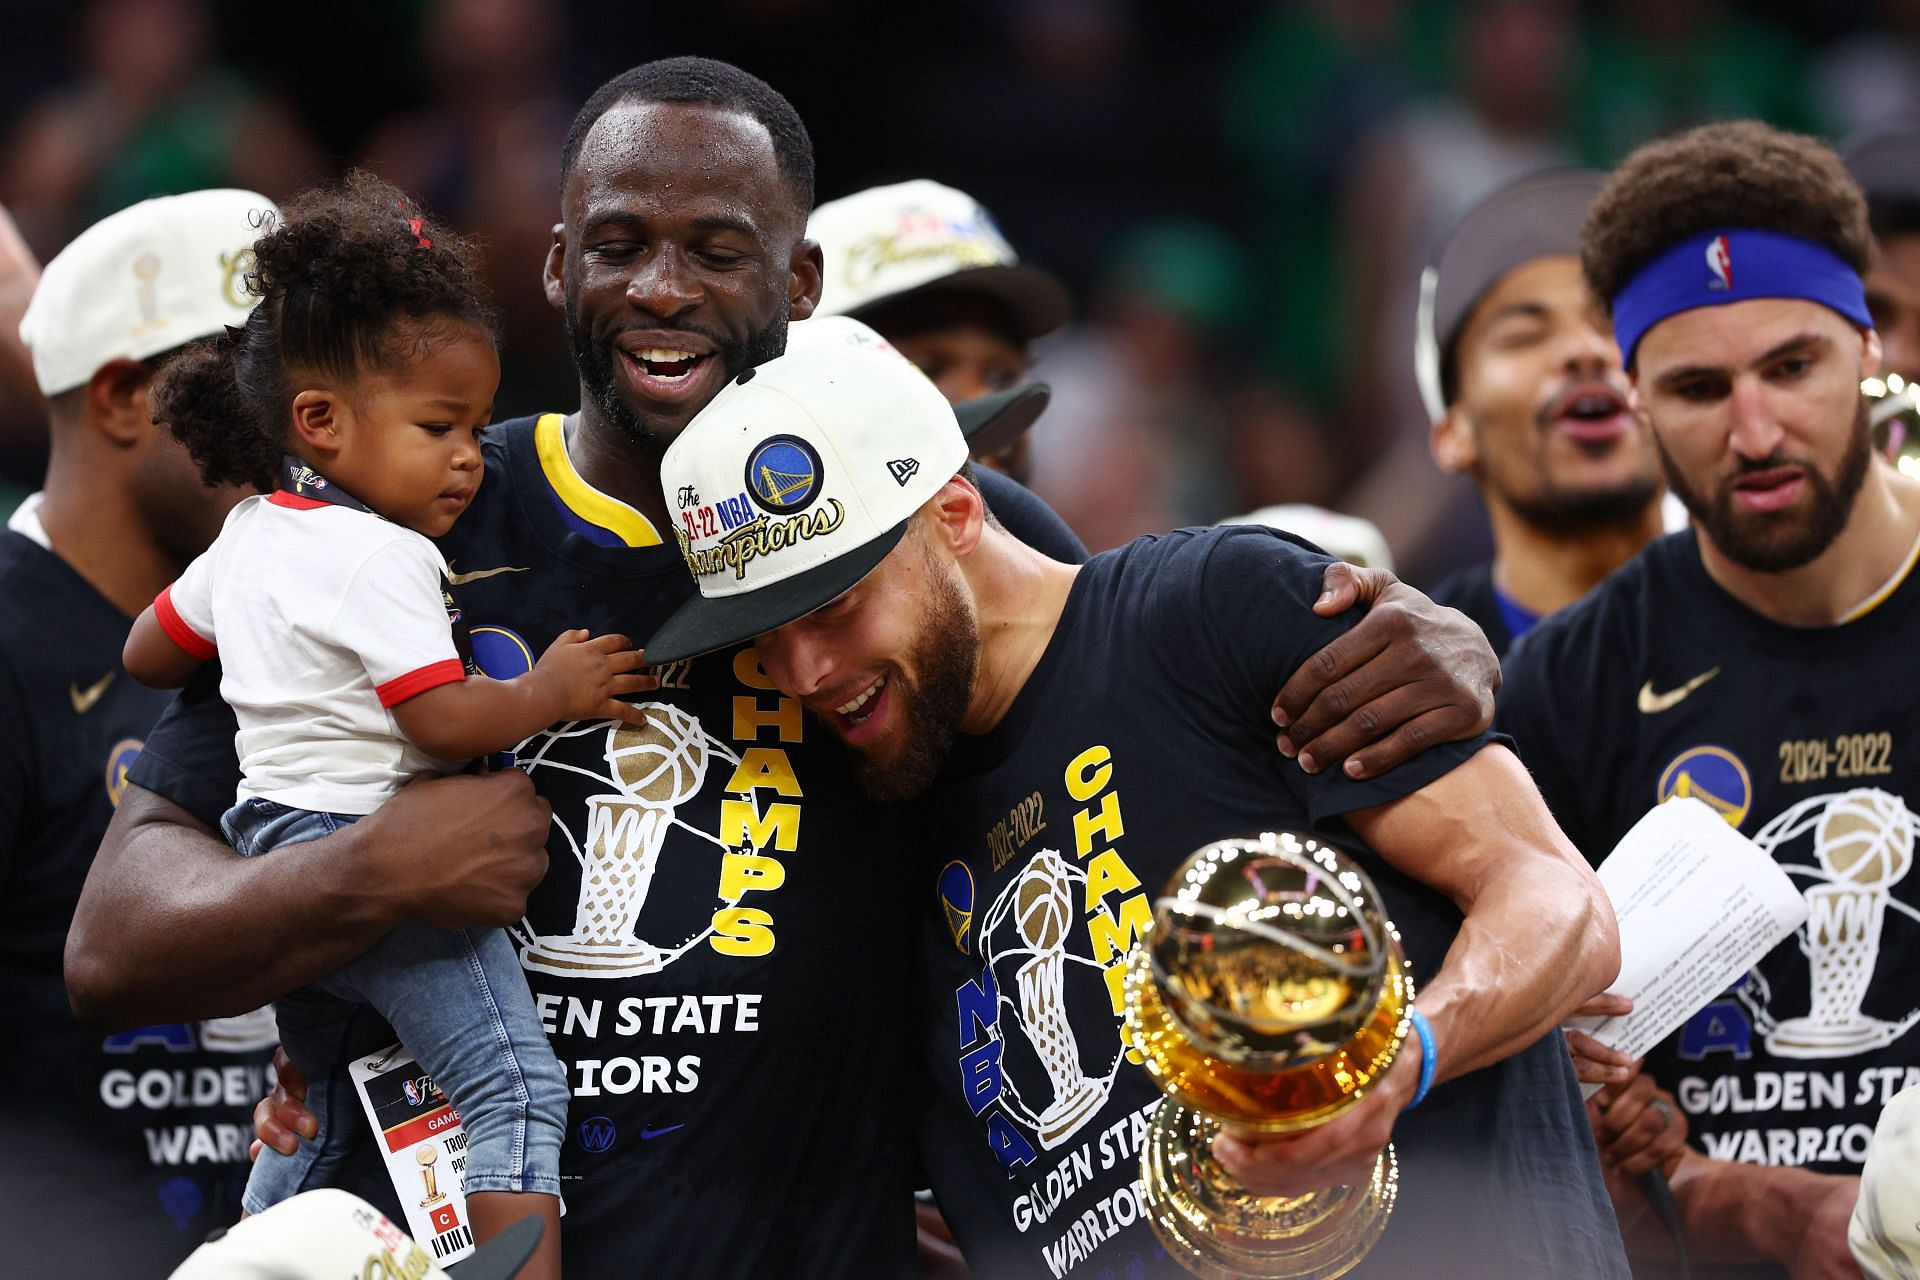 The Golden State Warriors&#039; trio celebrates winning the NBA championship